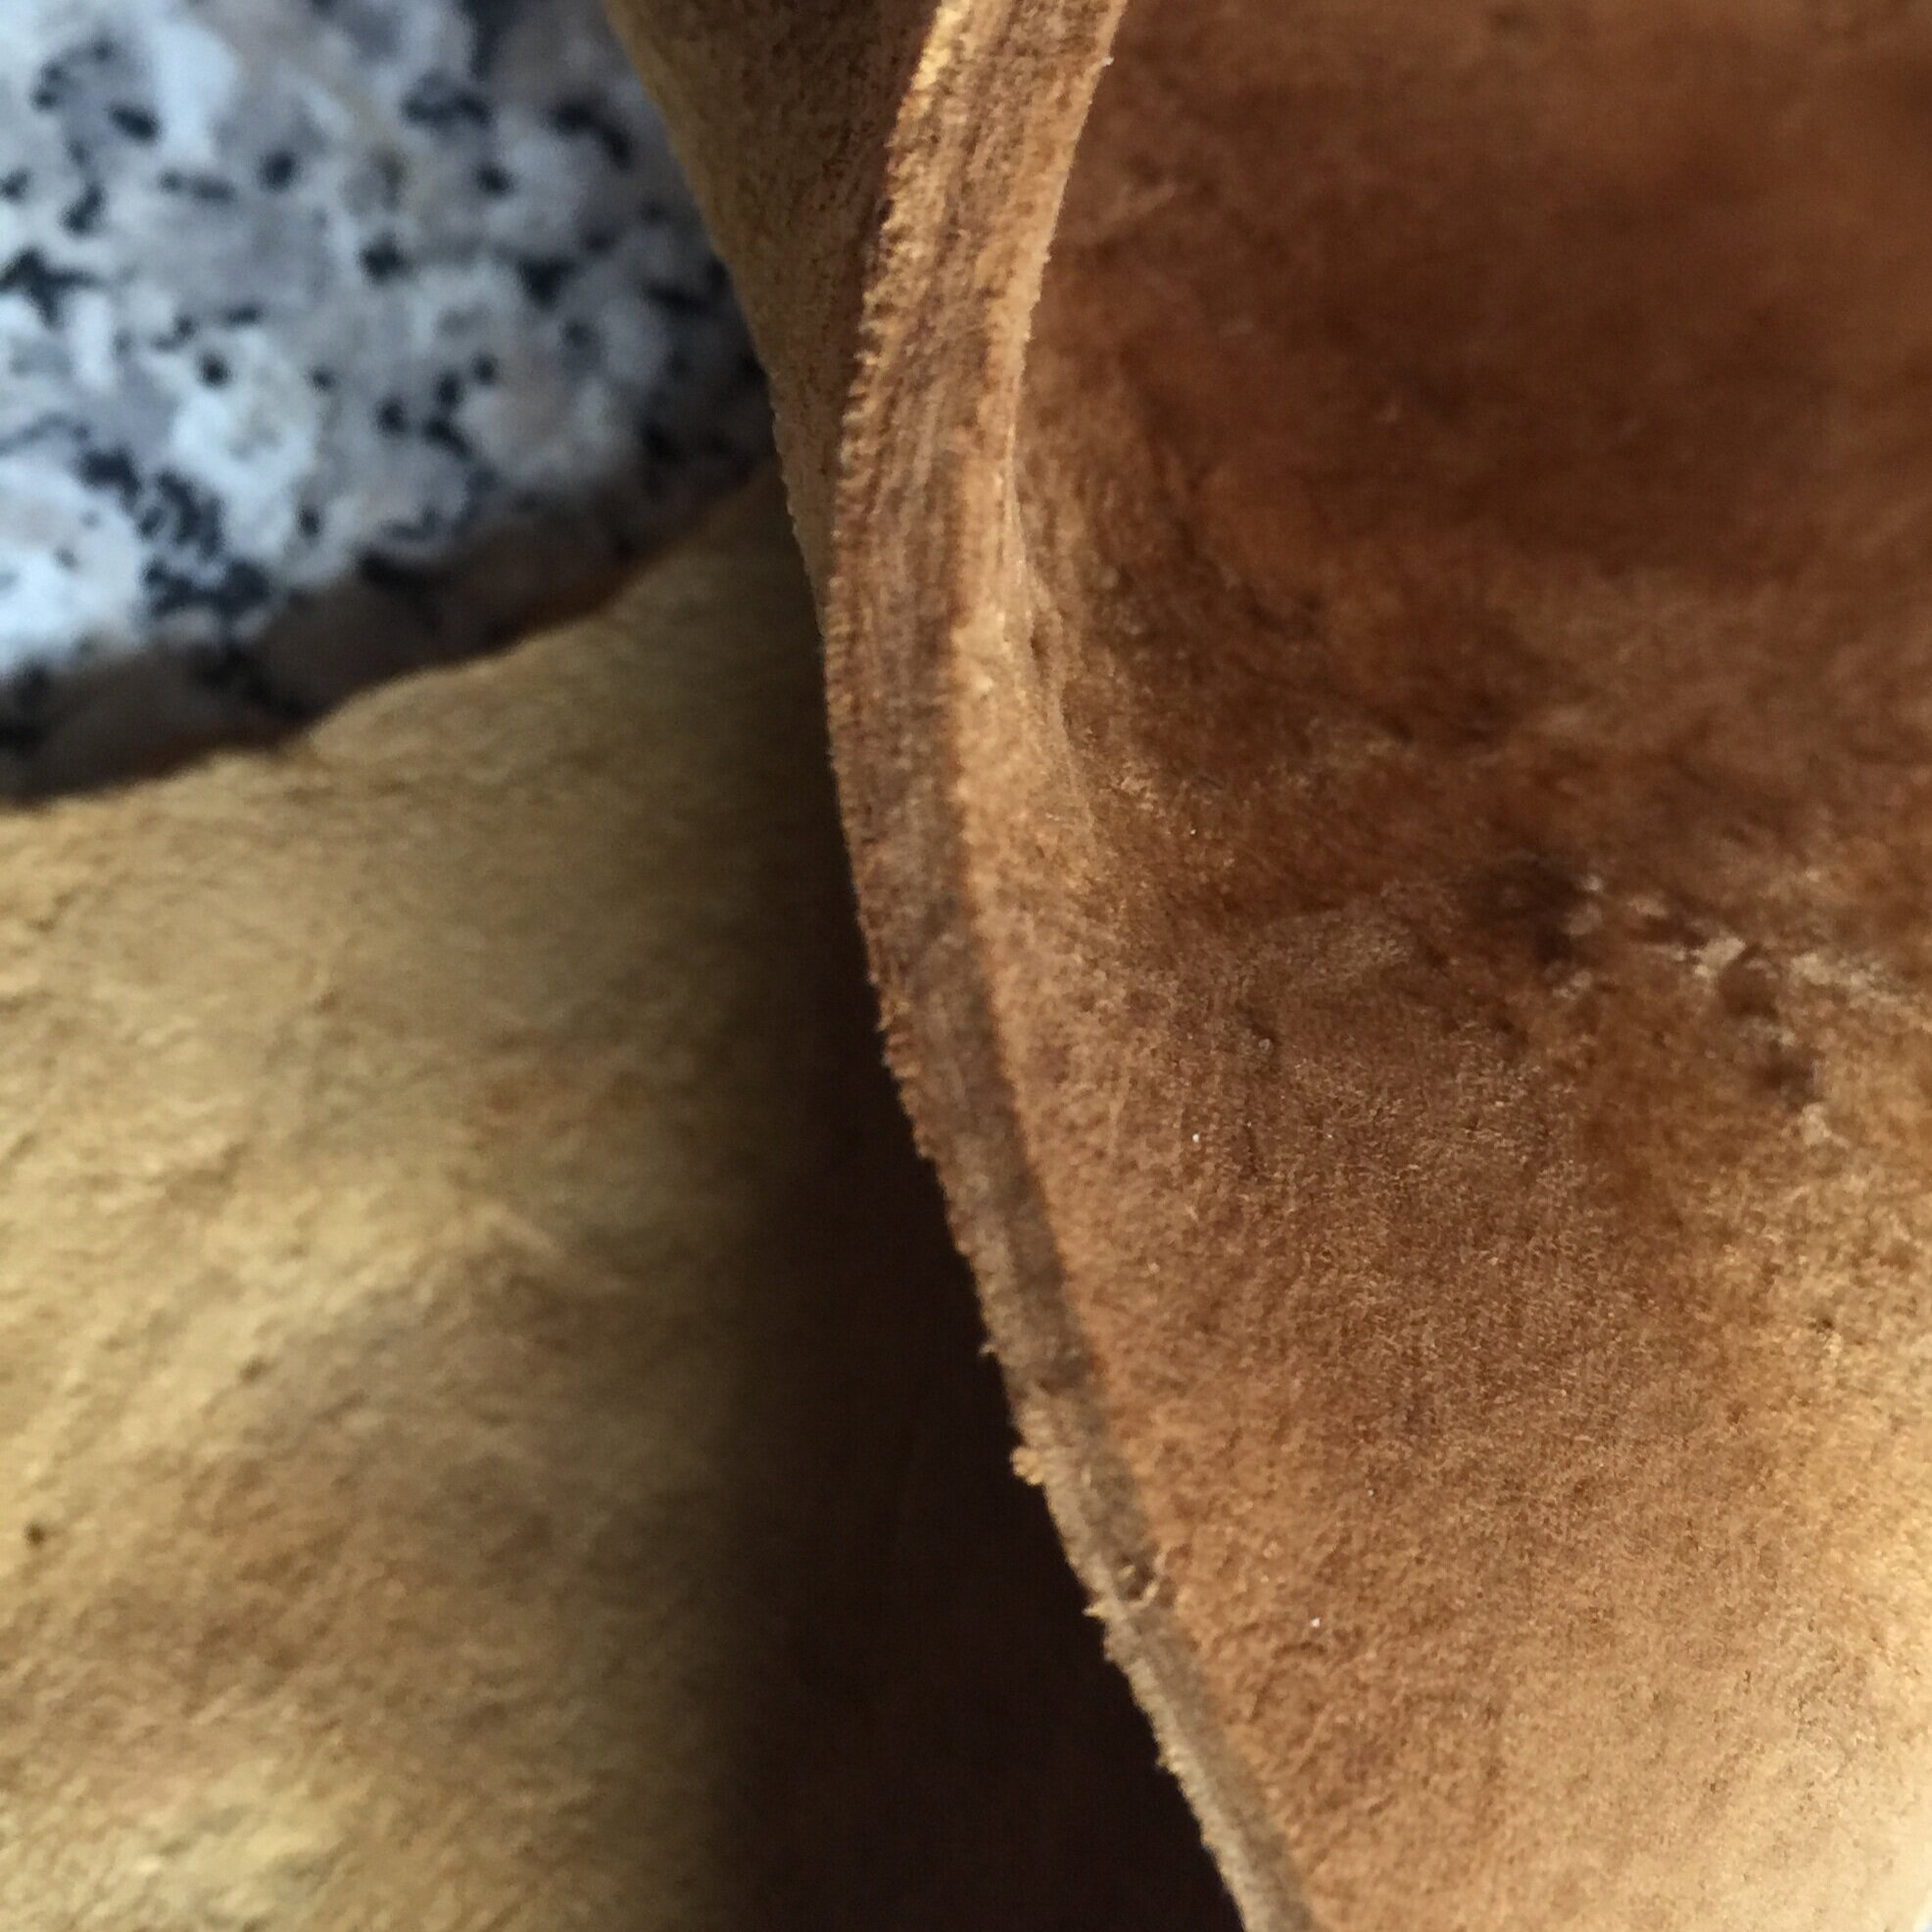   Mushroom-Leather , 2019 Ontario Fomes fomentarius/ Tinder fungus/Amadou PHOTO: TOSCA TERÁN  